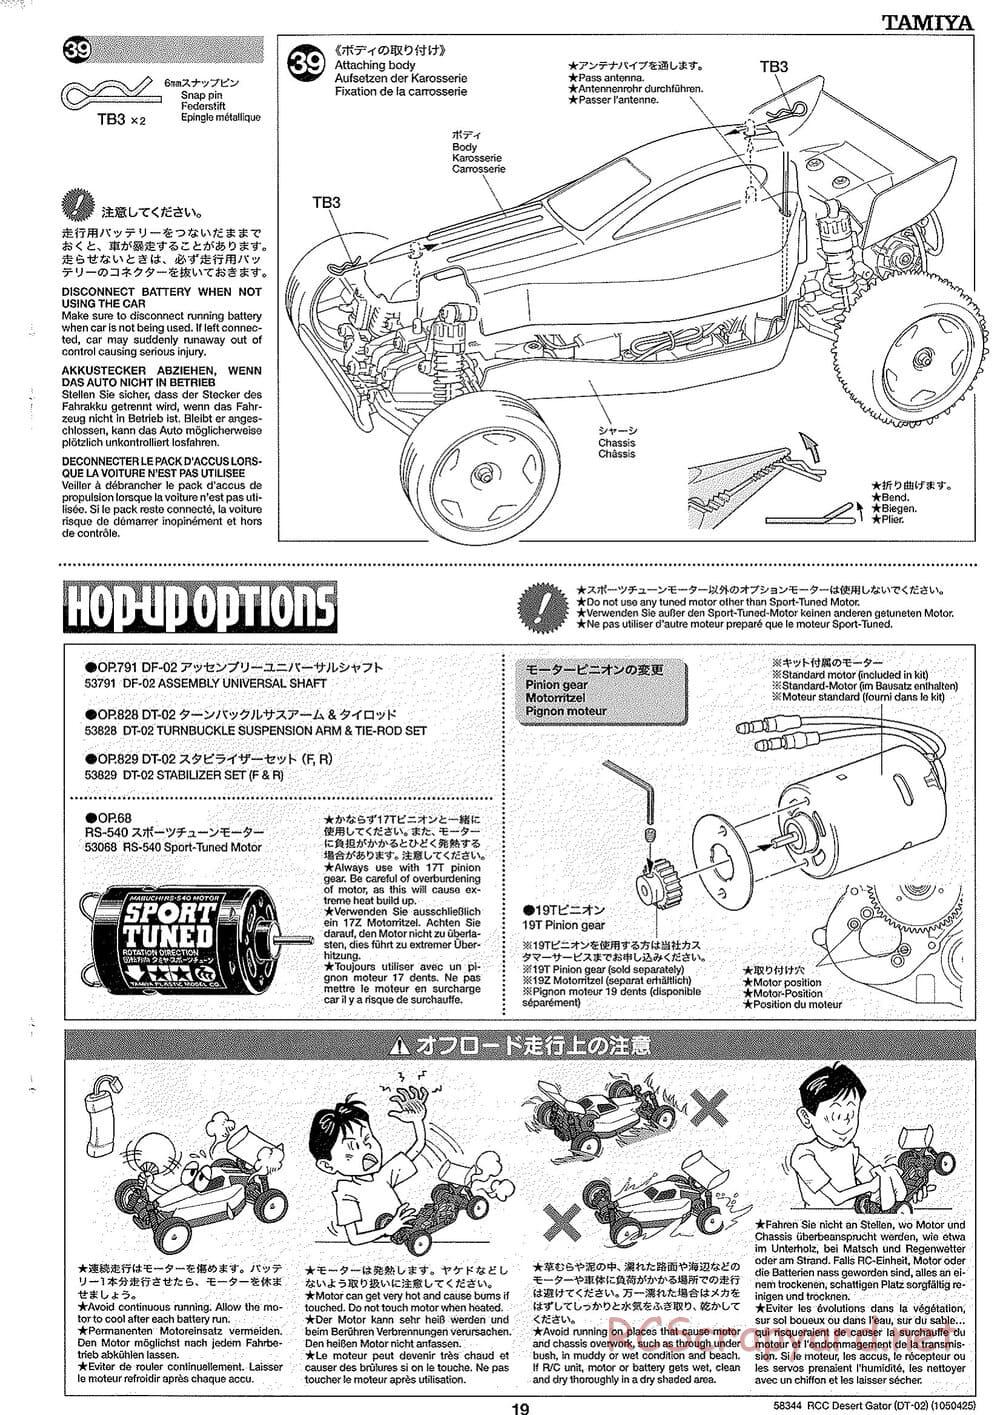 Tamiya - Desert Gator Chassis - Manual - Page 19